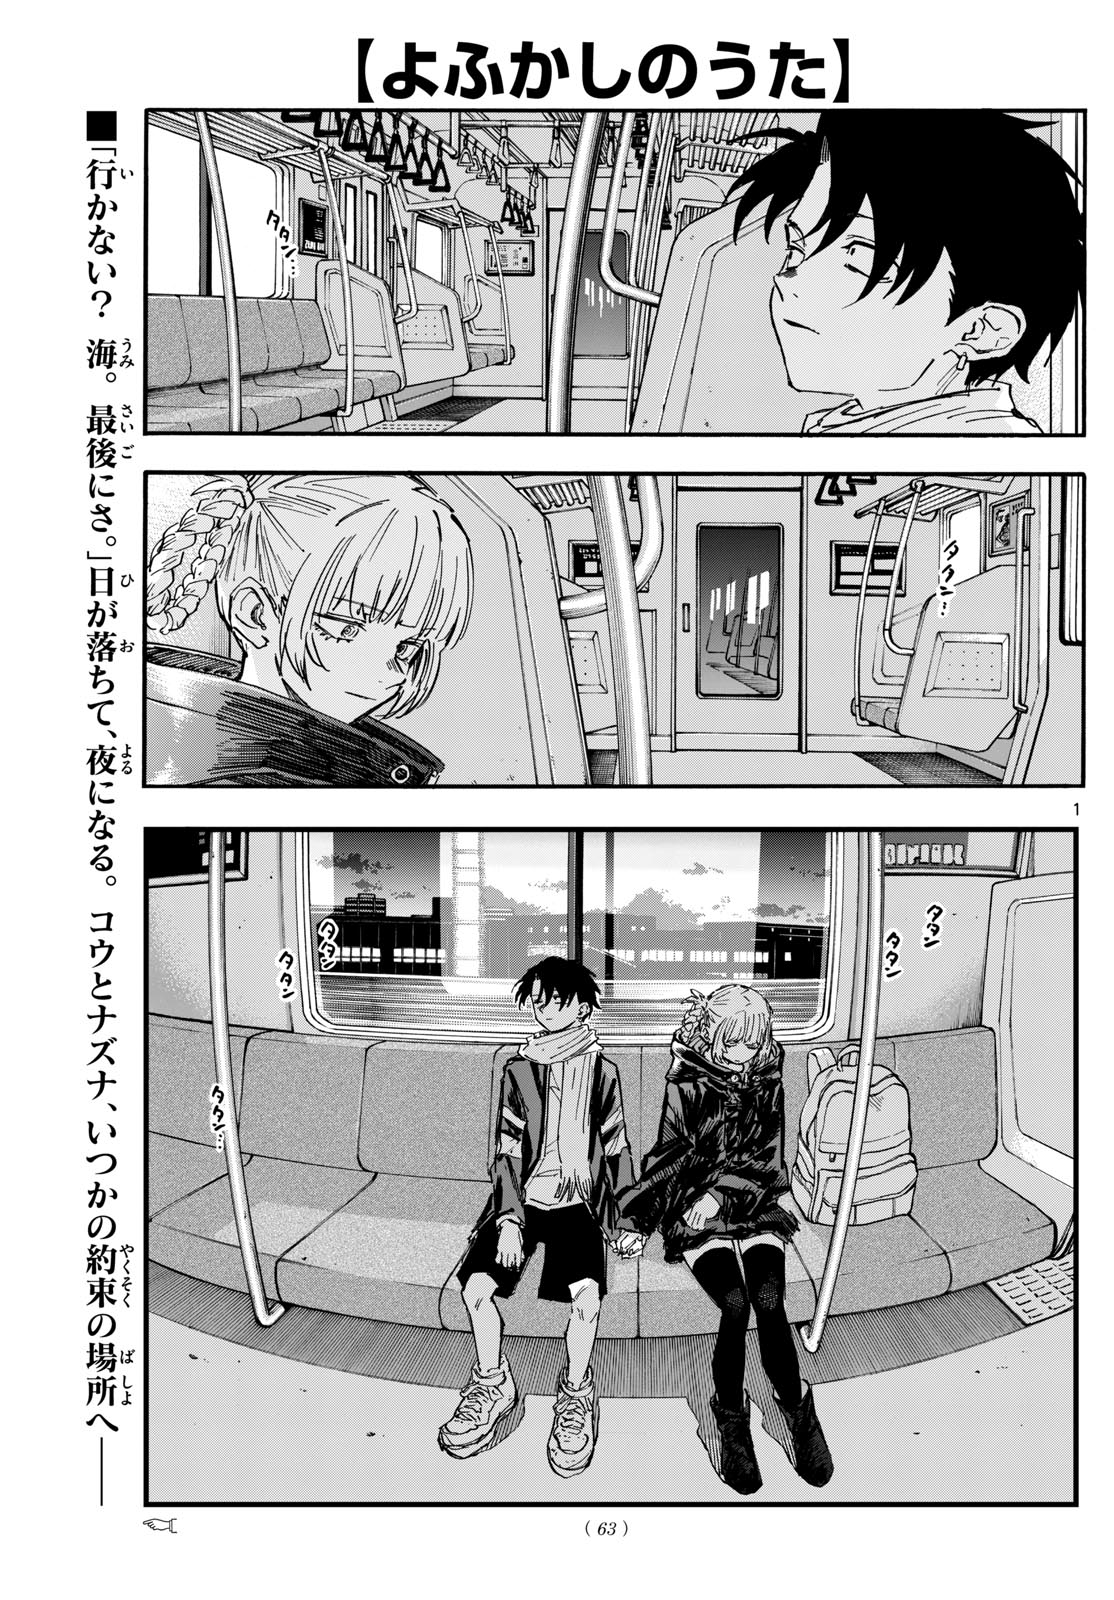 Yofukashi no Uta - Chapter 196 - Page 1